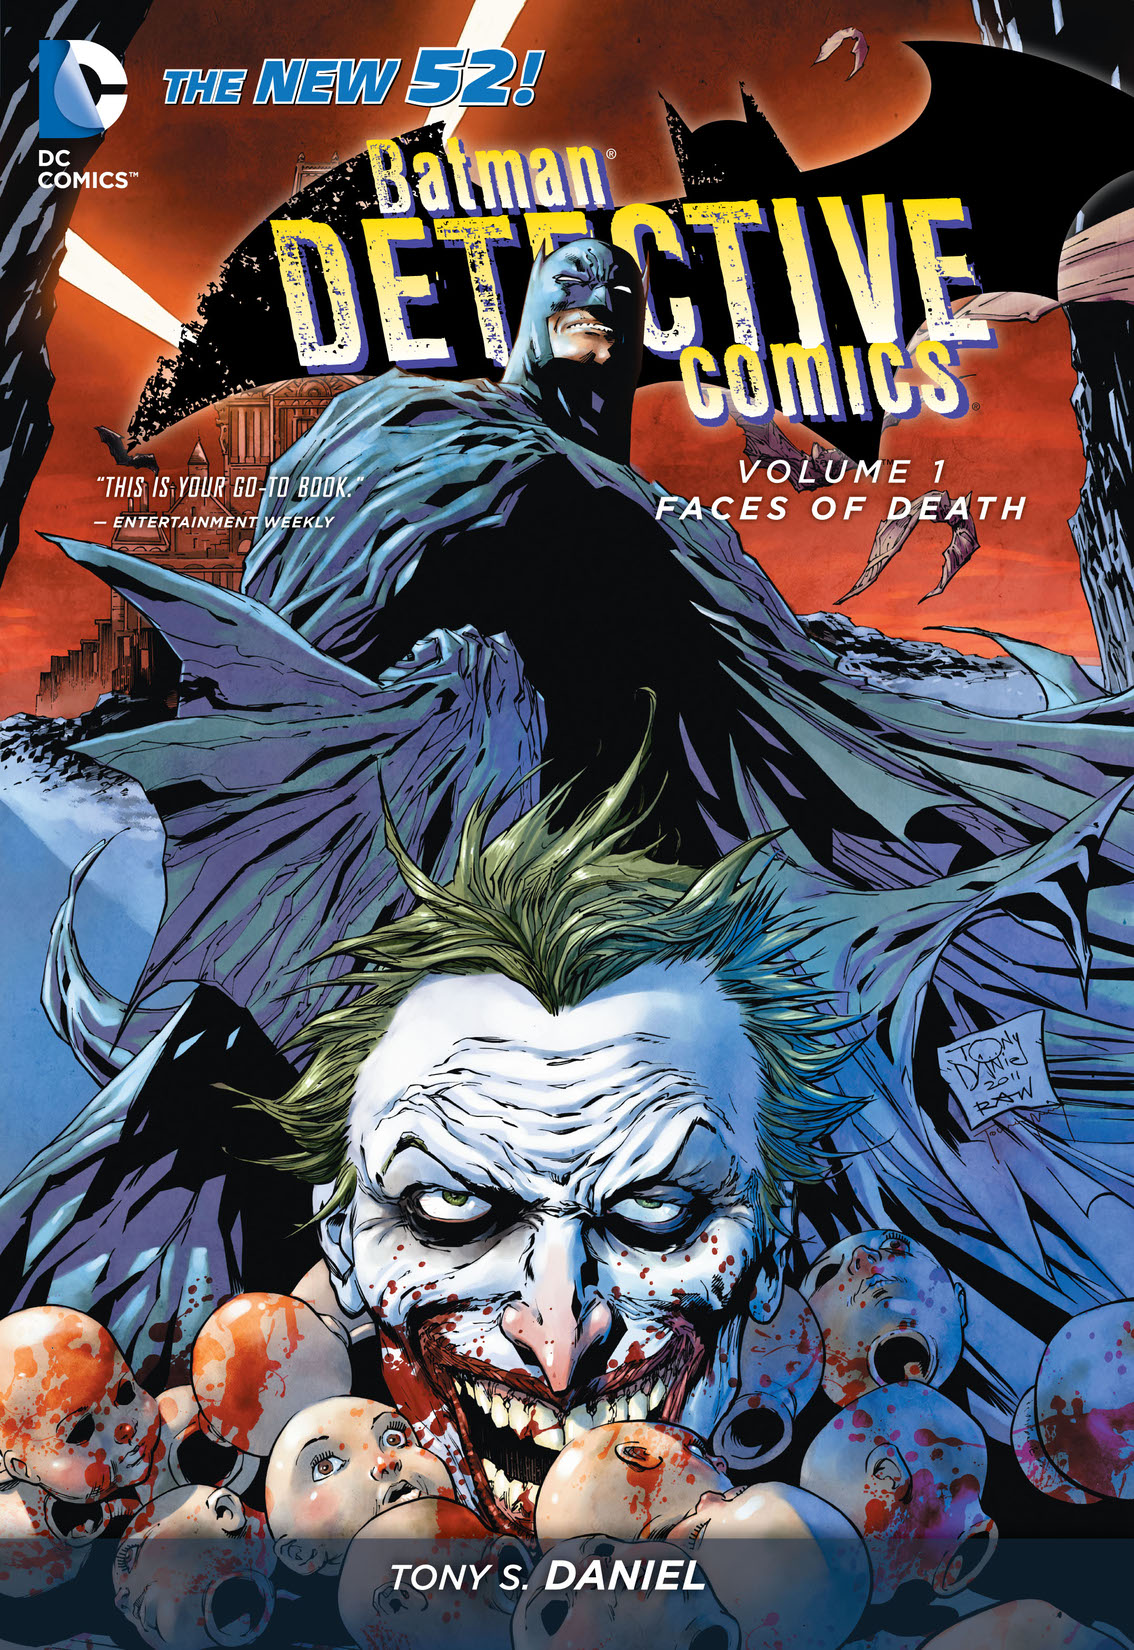 Batman - Detective Comics Vol. 1: Faces of Death preview images